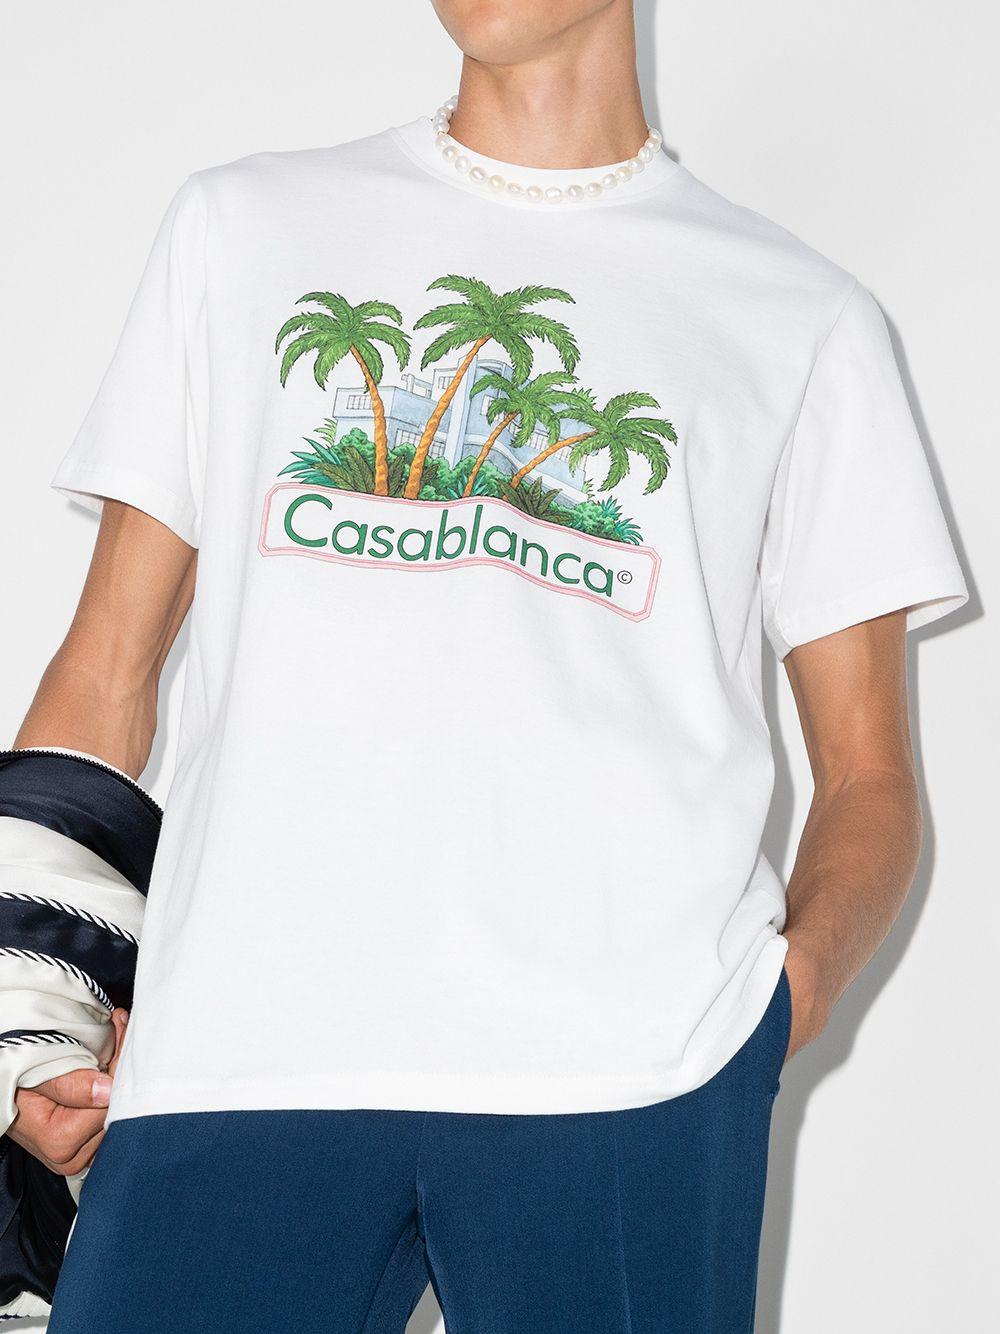 CASABLANCA X Browns 50 Island Graphic-print T-shirt in White for Men - Lyst